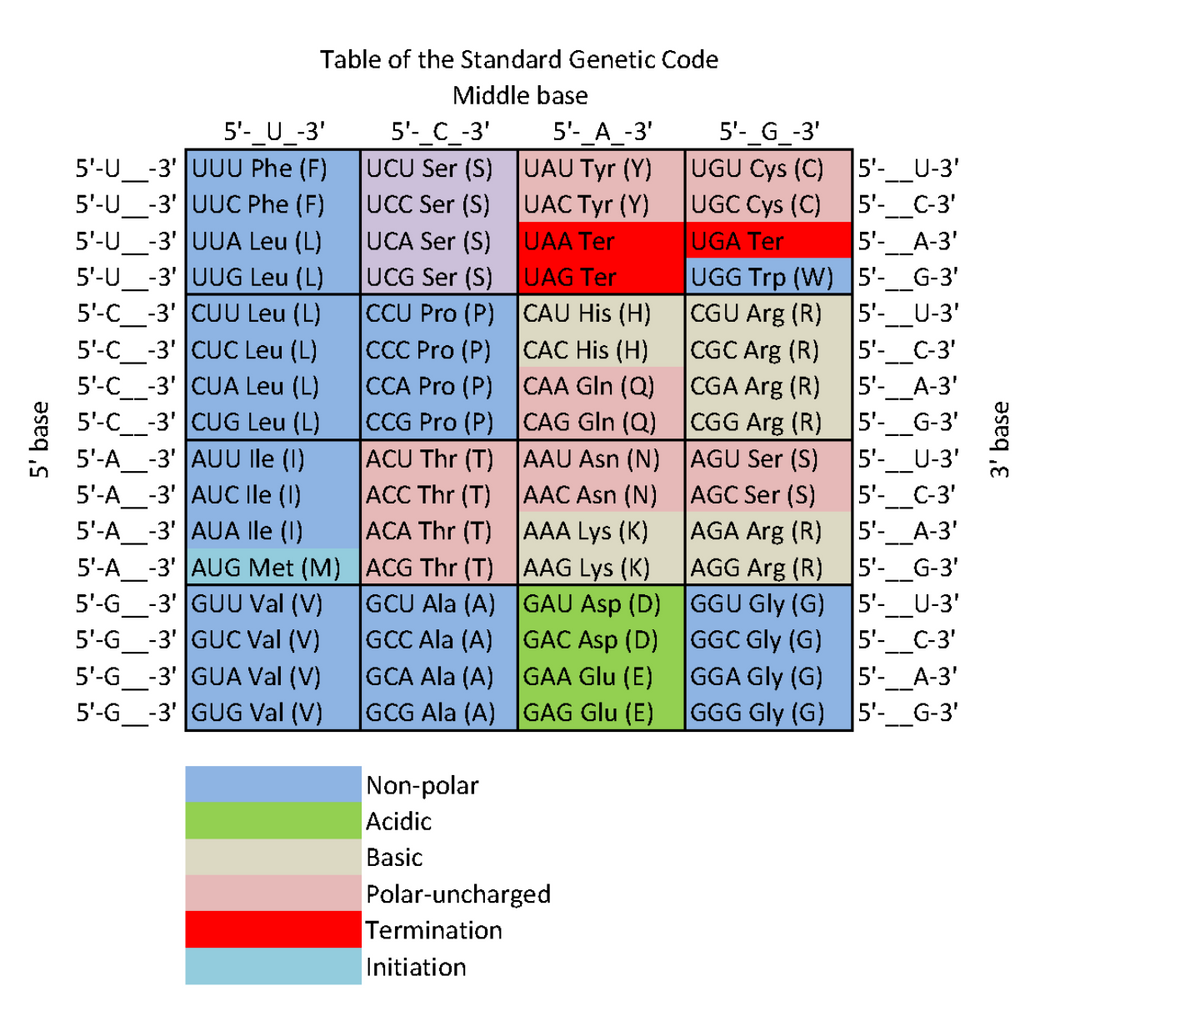 Table of the Standard Genetic Code
Middle base
5'- C_-3'
UCU Ser (S) |UAU Tyr (Y)
UCC Ser (S) UAC Tyr (Y)
UCA Ser (S)
UCG Ser (S)UAG Ter
CCU Pro (P) CAU His (H)
CCC Pro (P)
CCA Pro (P) CAA GIn (Q)
CCG Pro (P) CAG GIn (Q)
5'- _U -3'
5'-_A_-3'
5'-_G_-3'
5'-U_-3' UUU Phe (F)
5'-U_-3' UUC Phe (F)
5'-U_-3' |UUA Leu (L)
5'-U_-3' UUG Leu (L)
5'-C_-3' |CUU Leu (L)
5'-C_-3' |CUC Leu (L)
5'-C_-3' CUA Leu (L)
5'-C_ -3' CUG Leu (L)
UGU Cys (C) 5'-_U-3'
5'-_C-3'
5'-_A-3'
UGG Trp (W) 5'-_G-3'
5'- U-3'
5'-C-3'
5'-_A-3"
5'- G-3'
5'- U-3'
5'-_C-3'
5- А-3'
5'-_G-3'
GCU Ala (A) GAU Asp (D) GGU Gly (G) 5'-_U-3'
5'-C-3'
GGA Gly (G)5'-_A-3'
GGG Gly (G) 5'-_G-3'
UGC Cys (C)
UGA Ter
UAA Ter
CGU Arg (R)
CGC Arg (R)
CGA Arg (R)
CGG Arg (R)
ACU Thr (T)|AAU Asn (N) AGU Ser (S)
AAC Asn (N) AGC Ser (S)
AGA Arg (R)
AGG Arg (R)
CAC His (H)
5'-A_-3' |AUU lle (1)
5'-A_-3' AUC Ile (1)
5'-A_-3' |AUA lle (1)
5'-A_-3' |AUG Met (M) ACG Thr (T) AAG Lys (K)
5'-G_-3' GUU Val (V)
5'-G_-3' GUC Val (V)
5'-G_-3' GUA Val (V)
5'-G_-3' GUG Val (V)
ACC Thr (T)
ACA Thr (T) AAA Lys (K)
GCC Ala (A)GAC Asp (D)
GCA Ala (A) GAA Glu (E)
GCG Ala (A) GAG Glu (E)
GGC Gly (G)
Non-polar
Acidic
Basic
Polar-uncharged
Termination
Initiation
5' base
3' base
